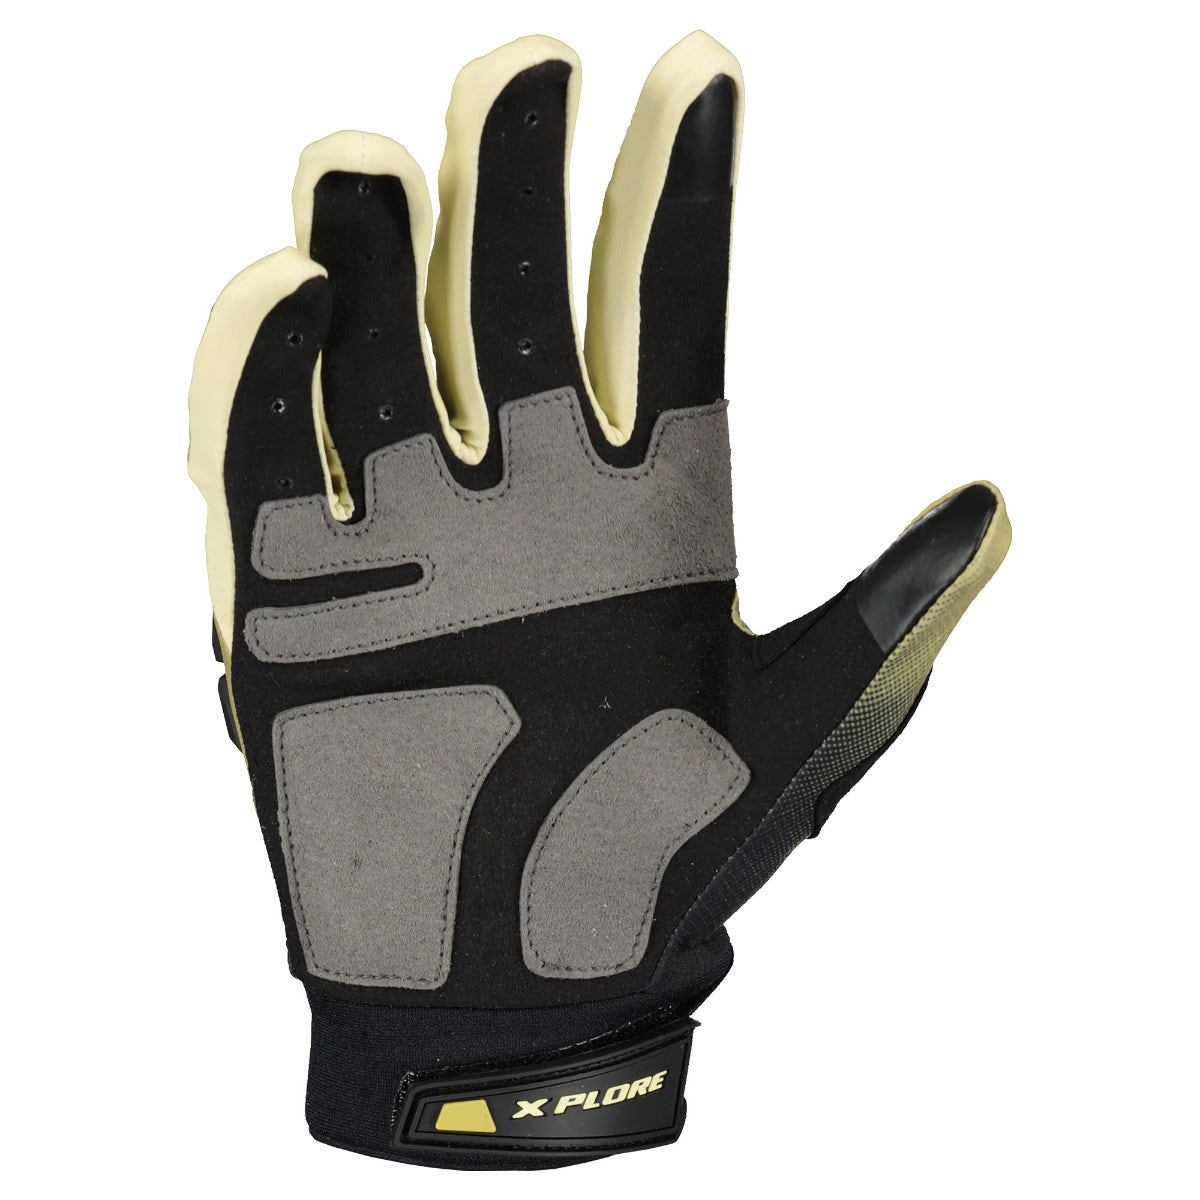 Scott X-Plore Pro Glove Camo Beige/Black